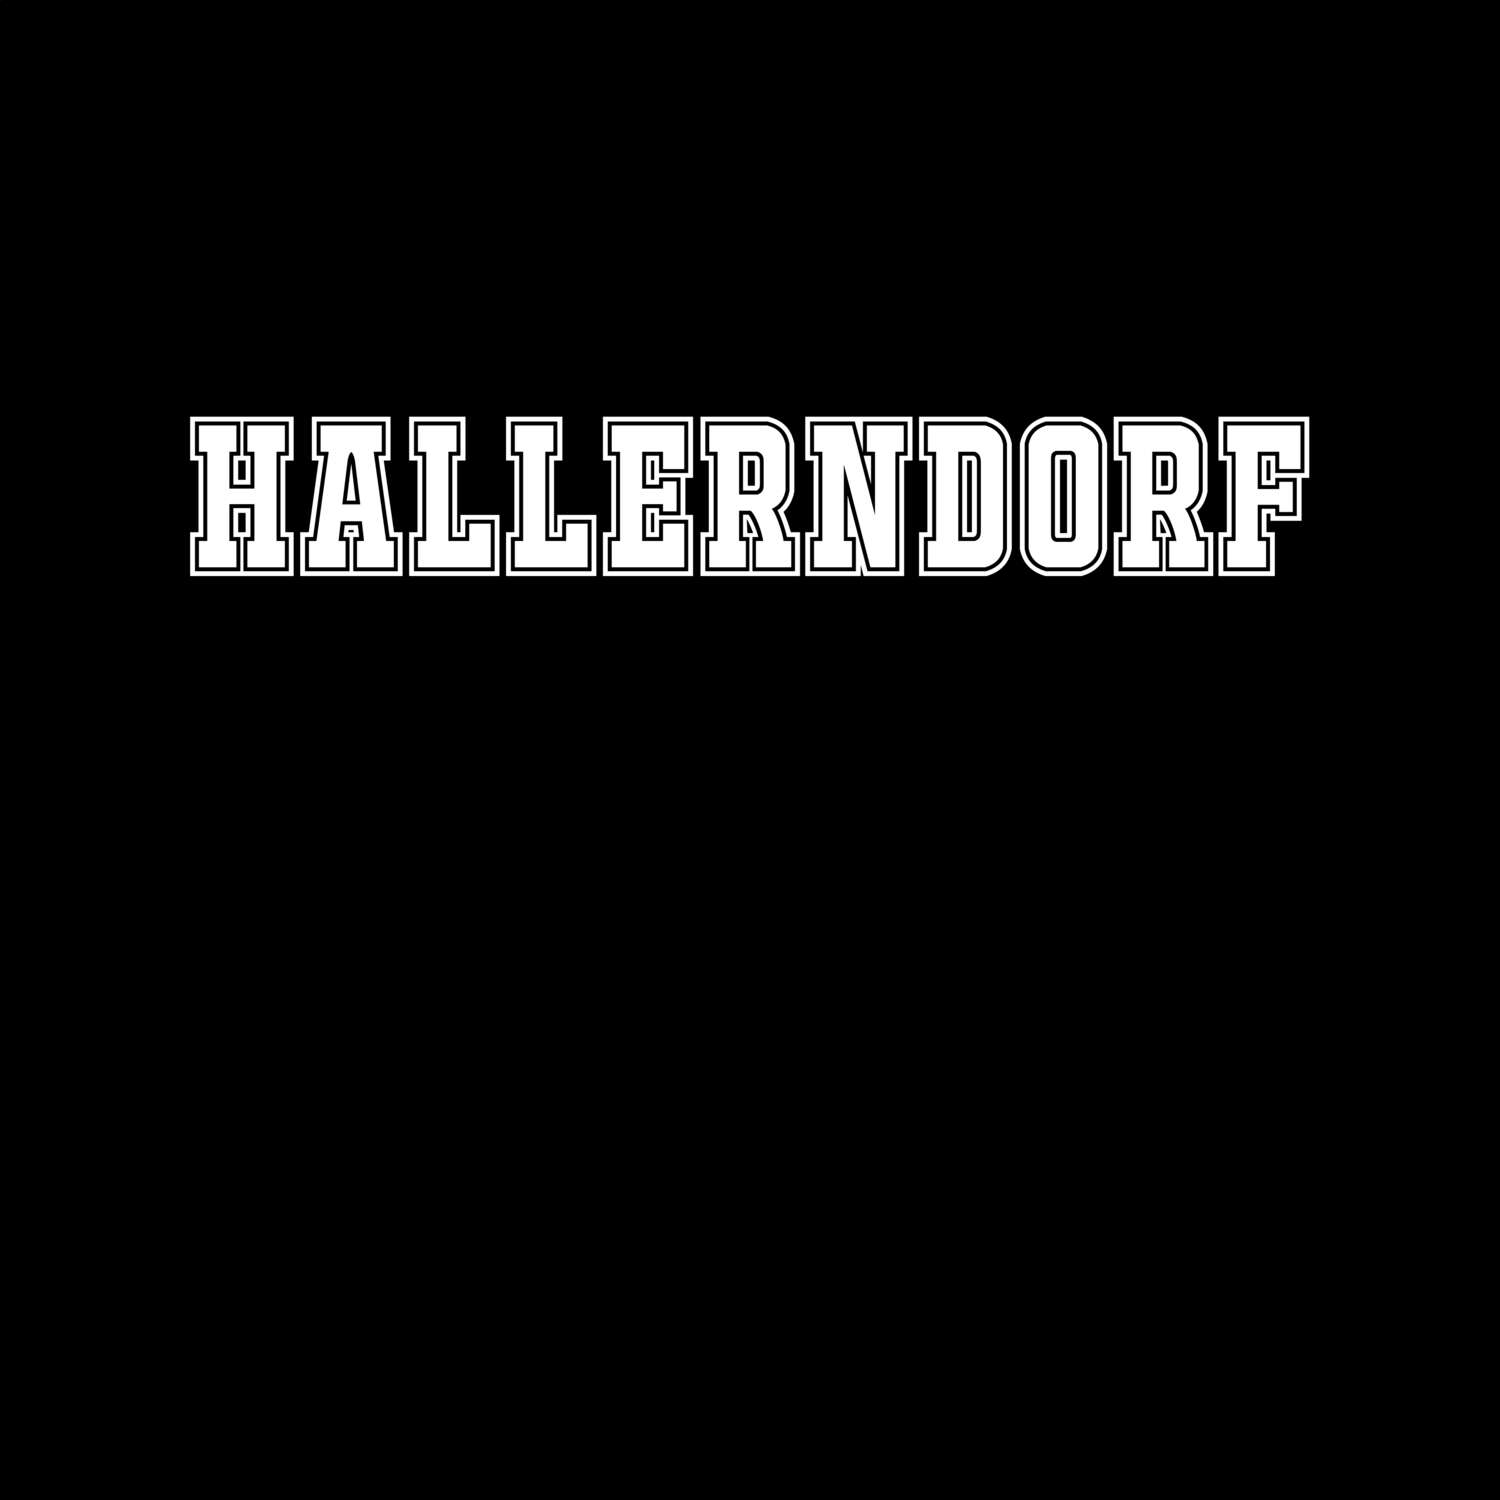 Hallerndorf T-Shirt »Classic«